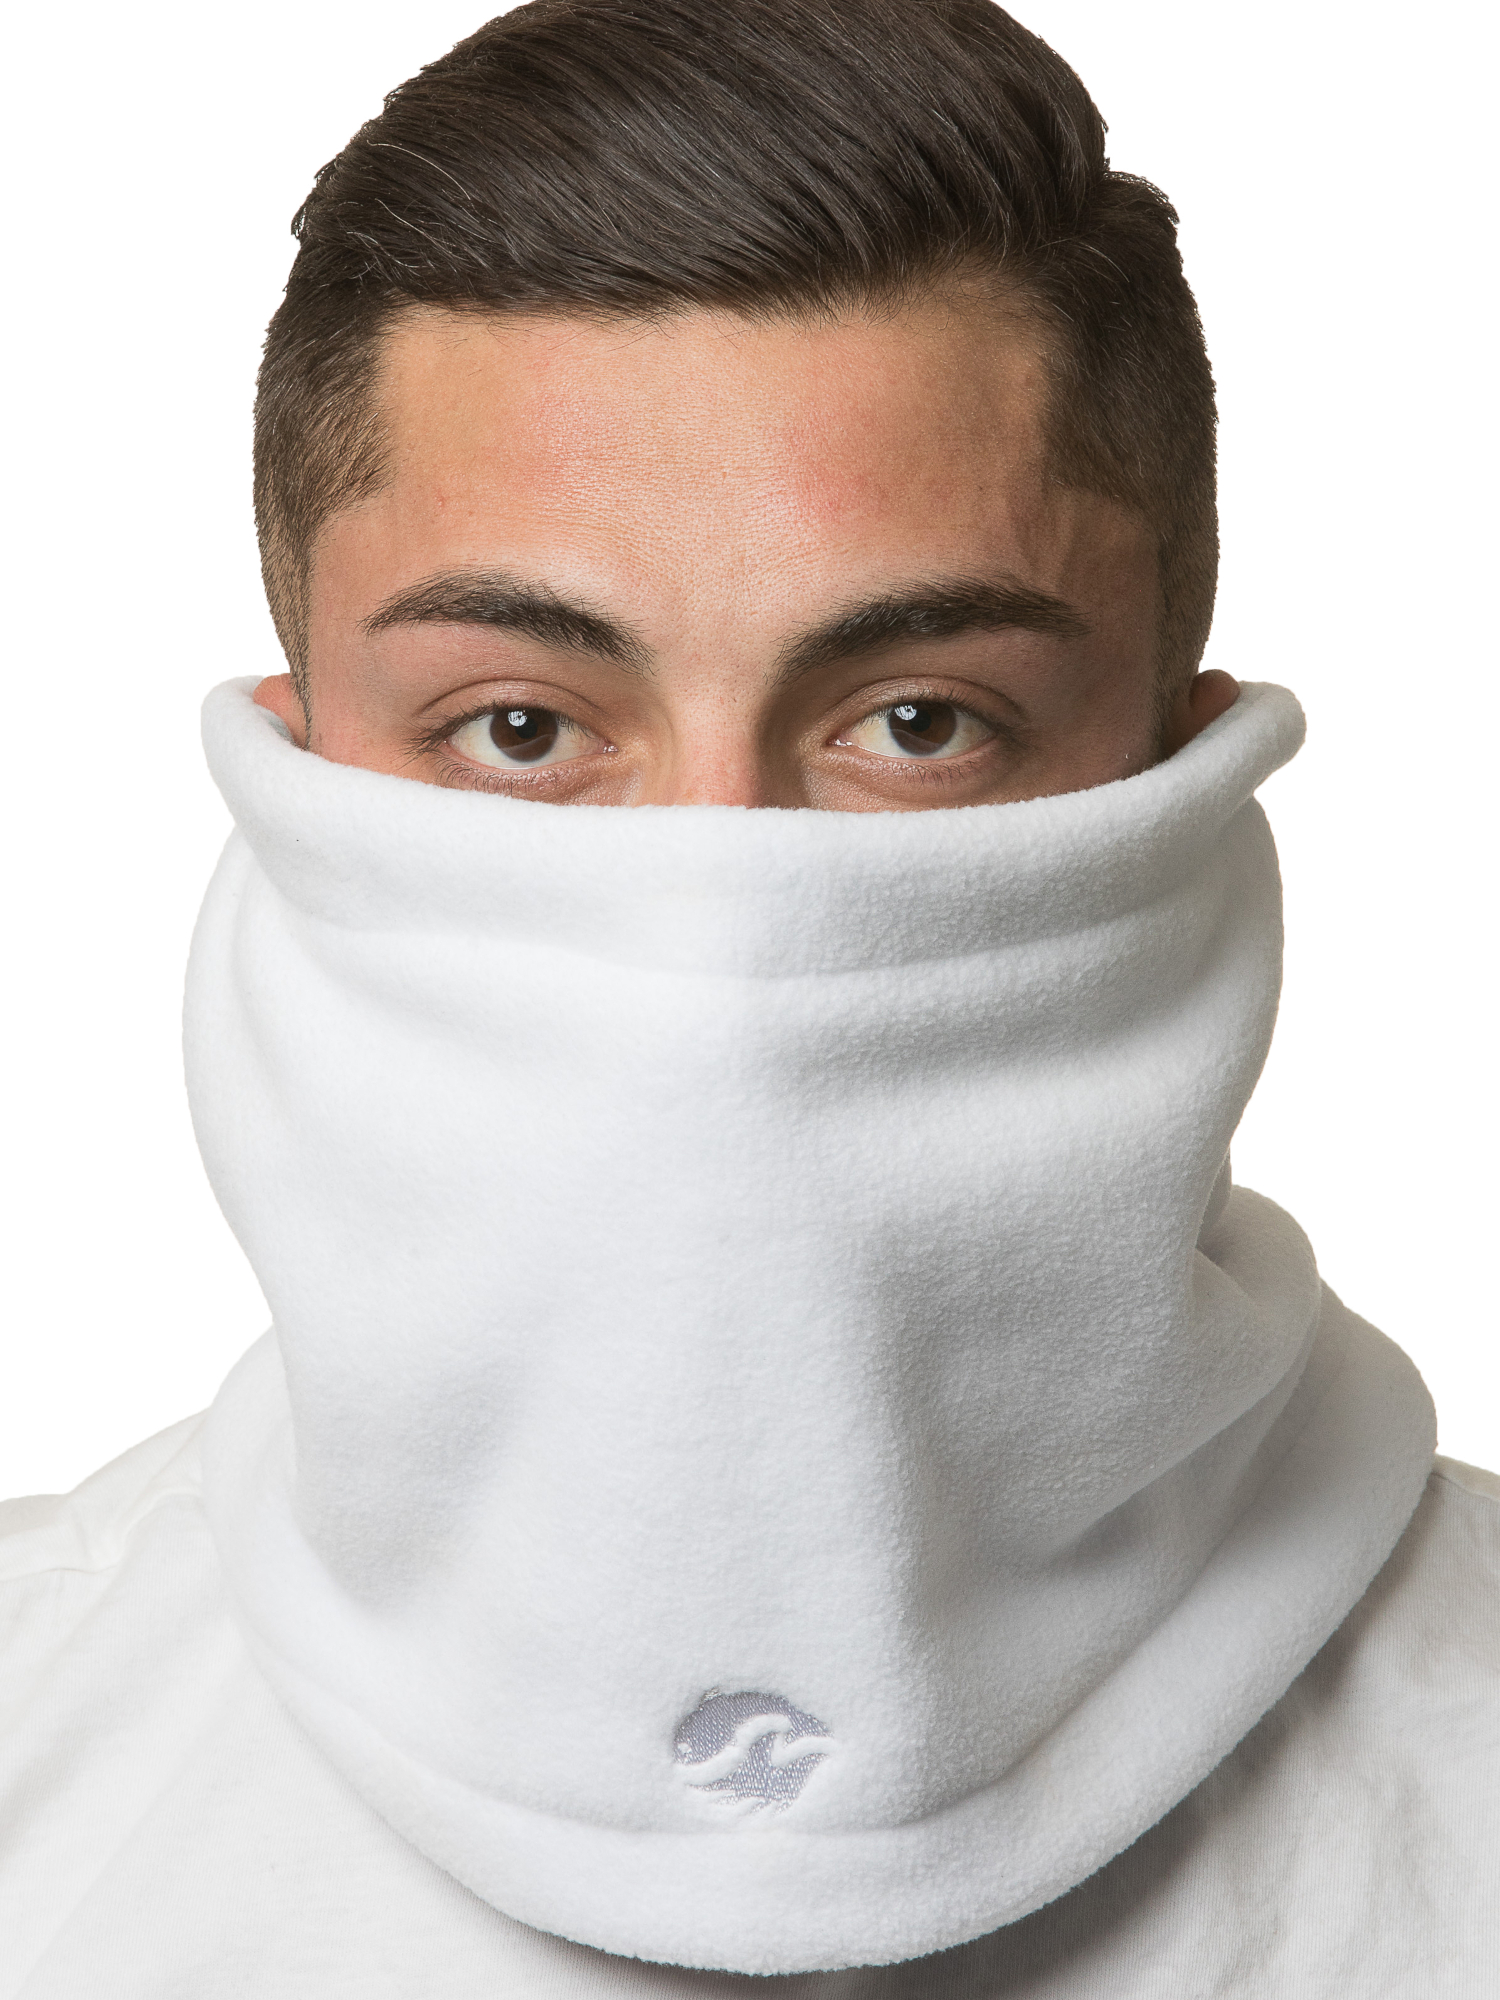 Aqua Design Neck Warmer Men Gaiter: Winter Cold Weather Camo Fleece Face Mask: Snow - image 5 of 6